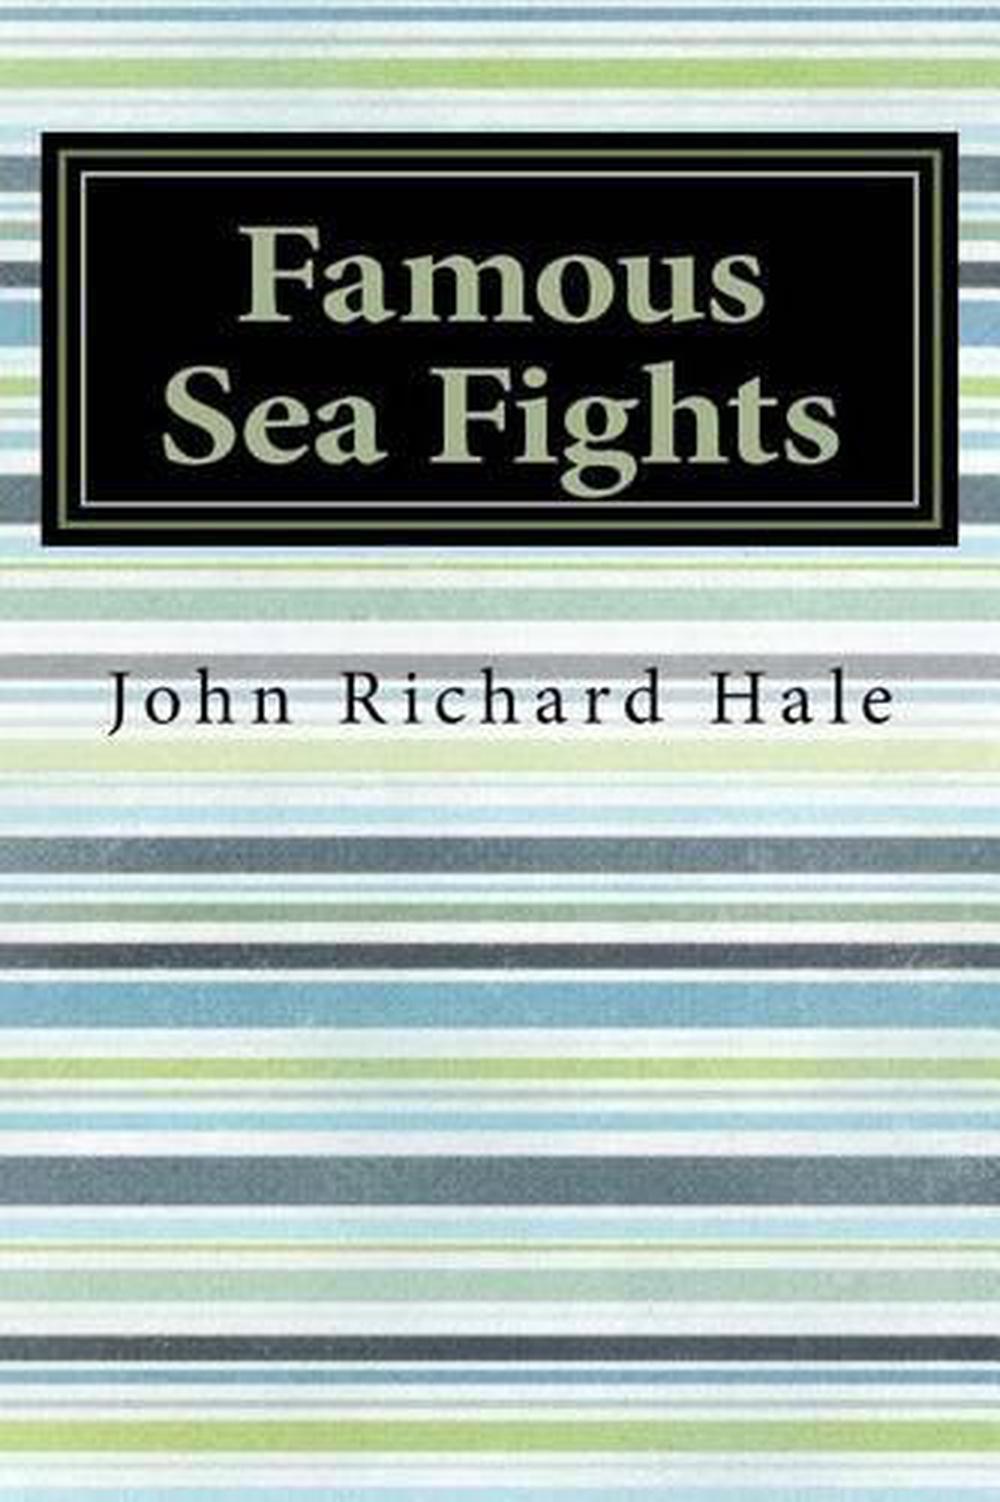 Sea Fights and Shipwrecks by Hanson W. Baldwin